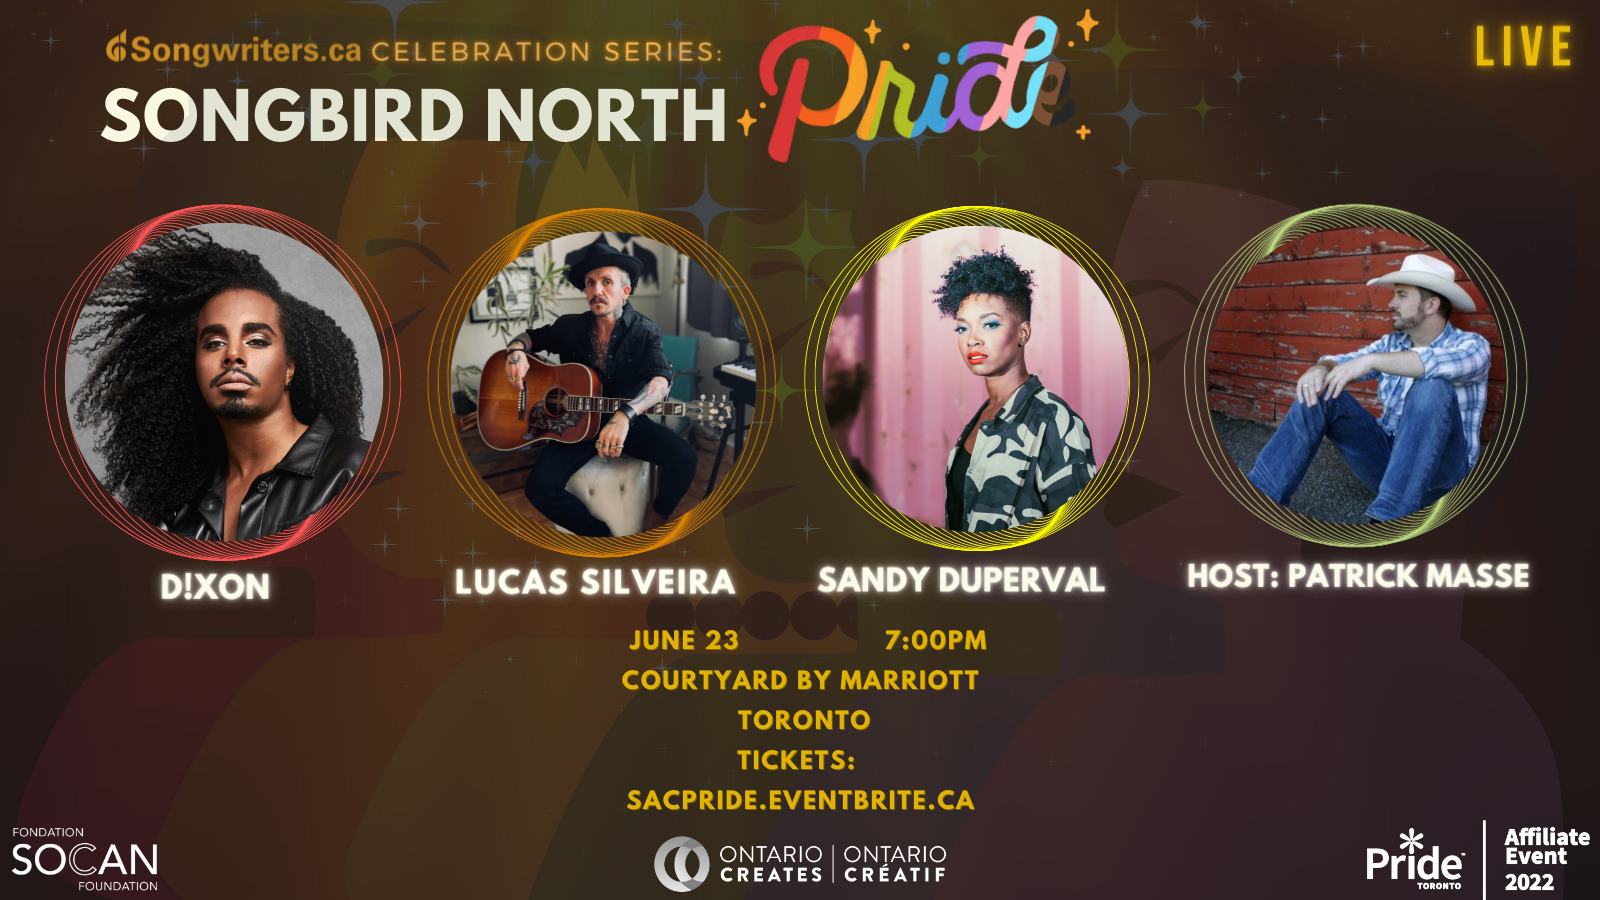 S.A.C. Celebration Series Songbird North: Pride Event